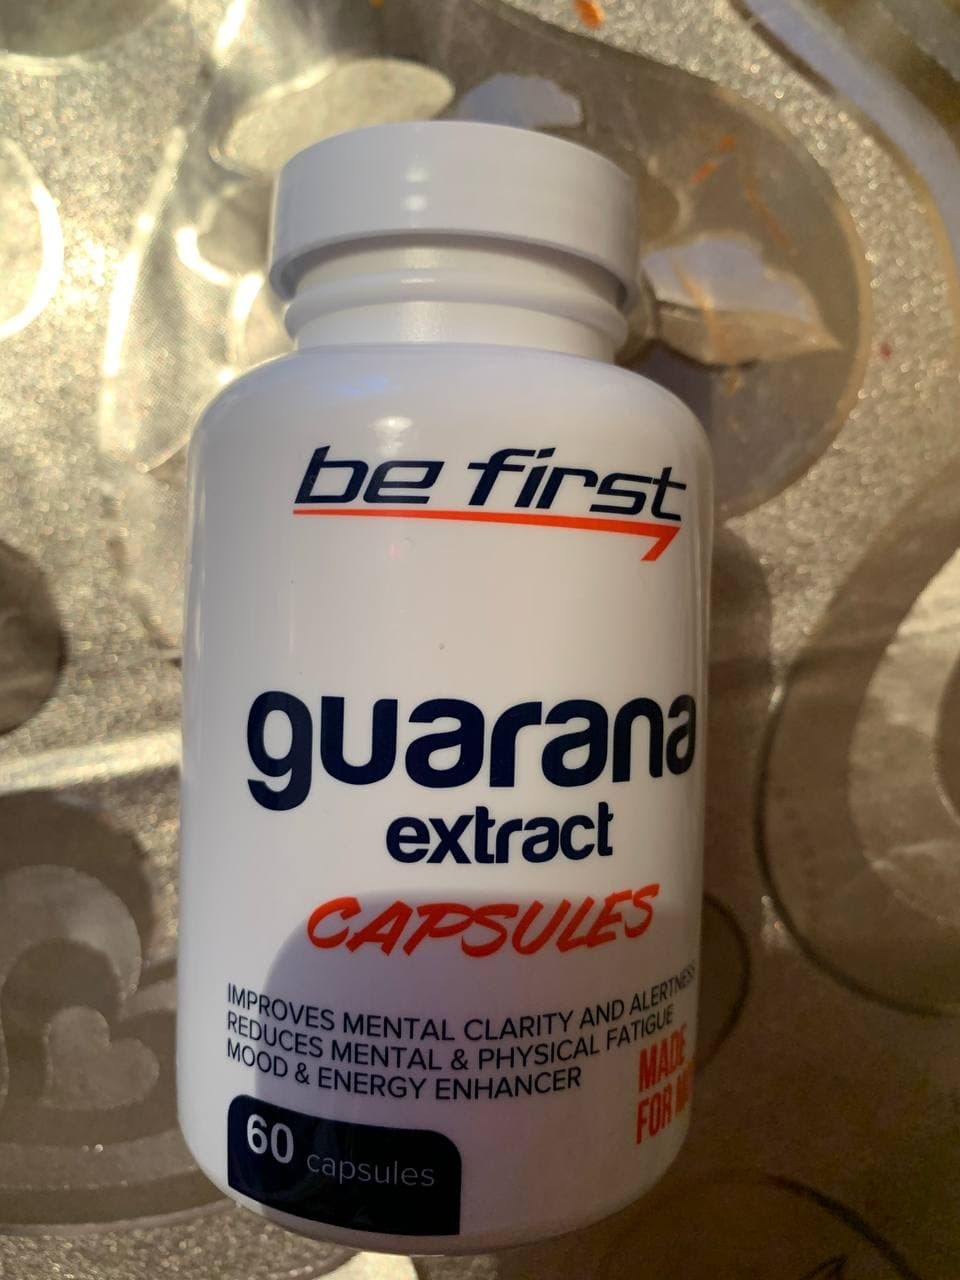 Be First Guarana Extract Capsules - Действует как энергетик